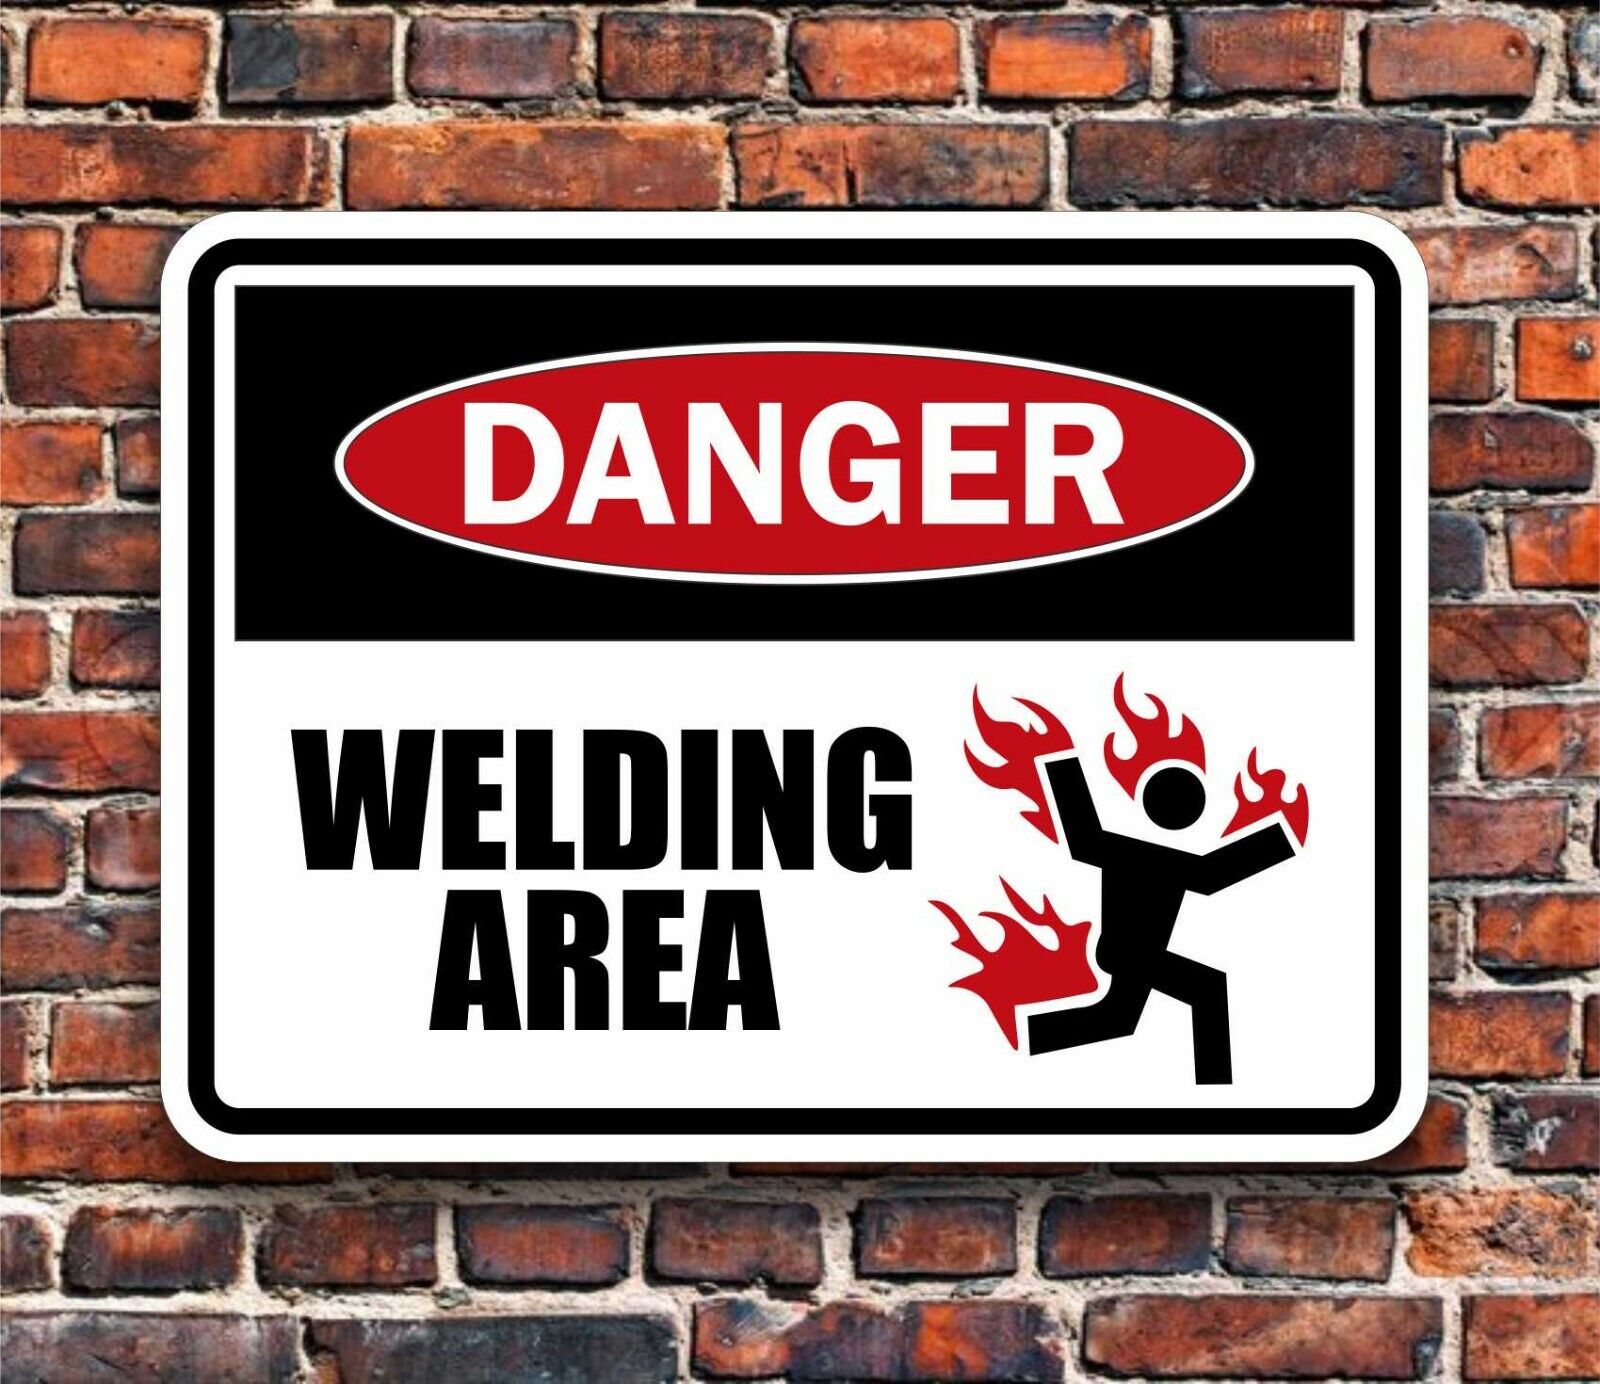 Welding Area Sign - Unique Danger Warning - Shop & Garage Decor - Hazard Plaque